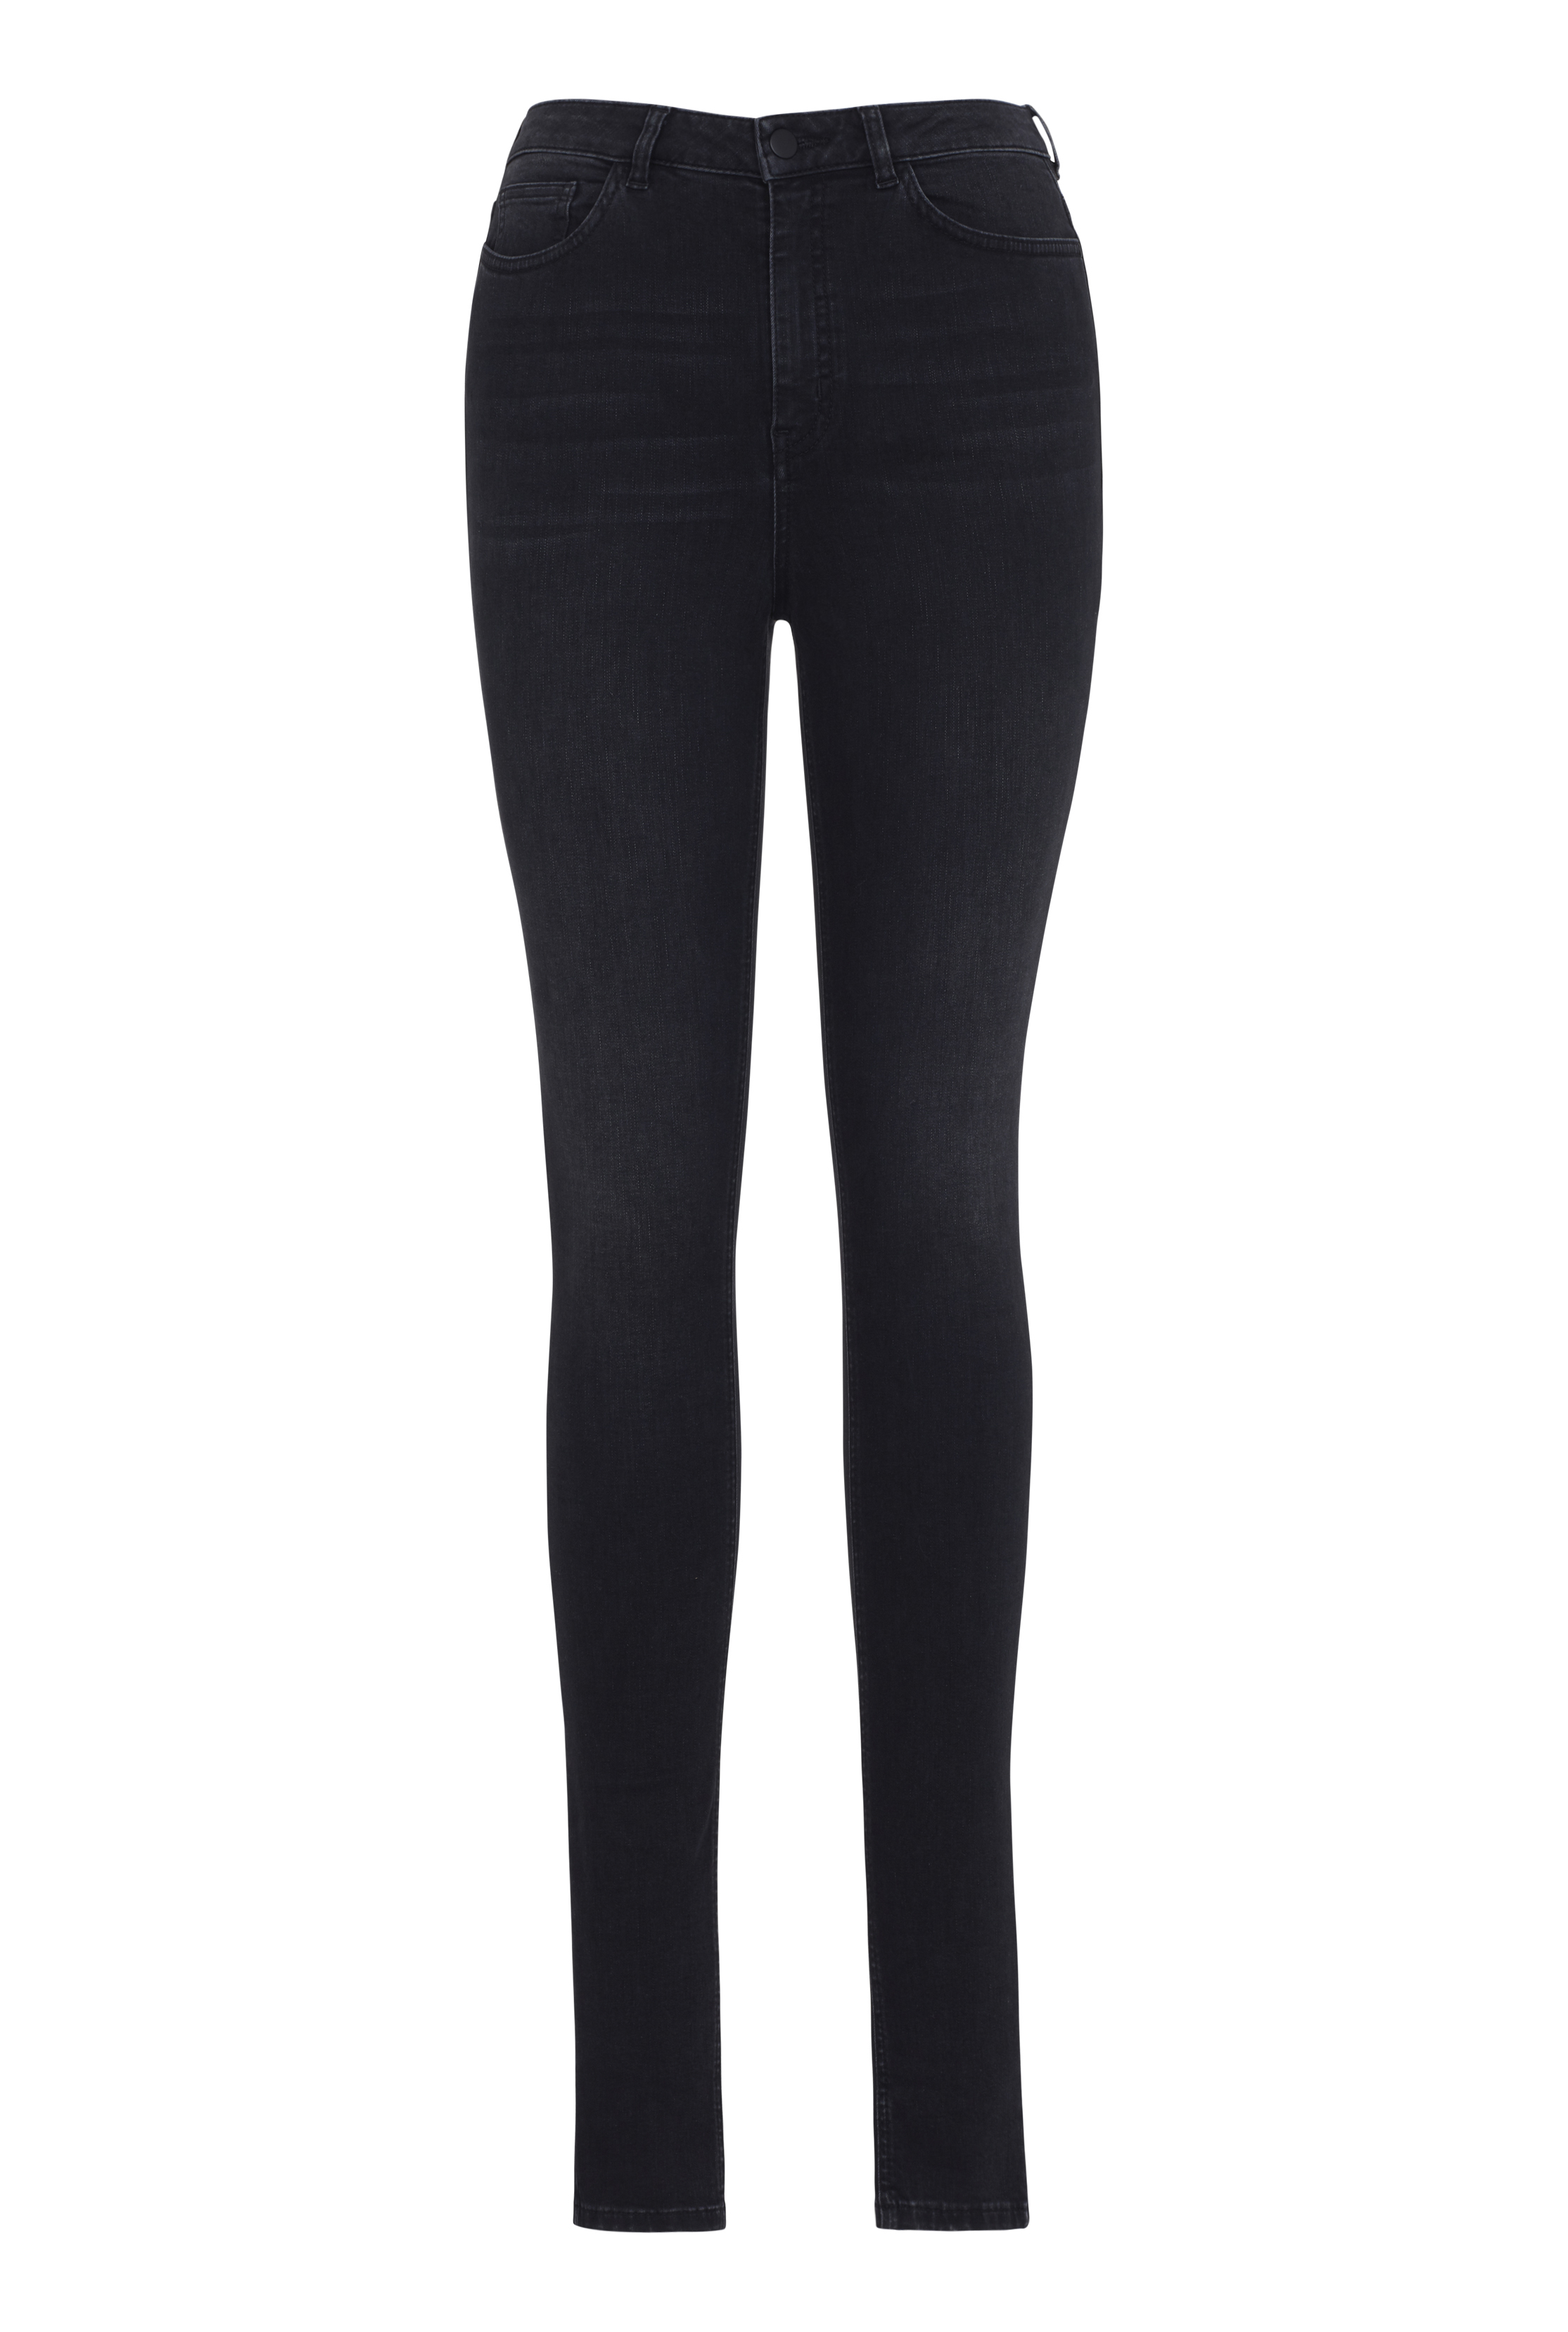 Black Ultra Stretch Skinny Jeans | Long Tall Sally